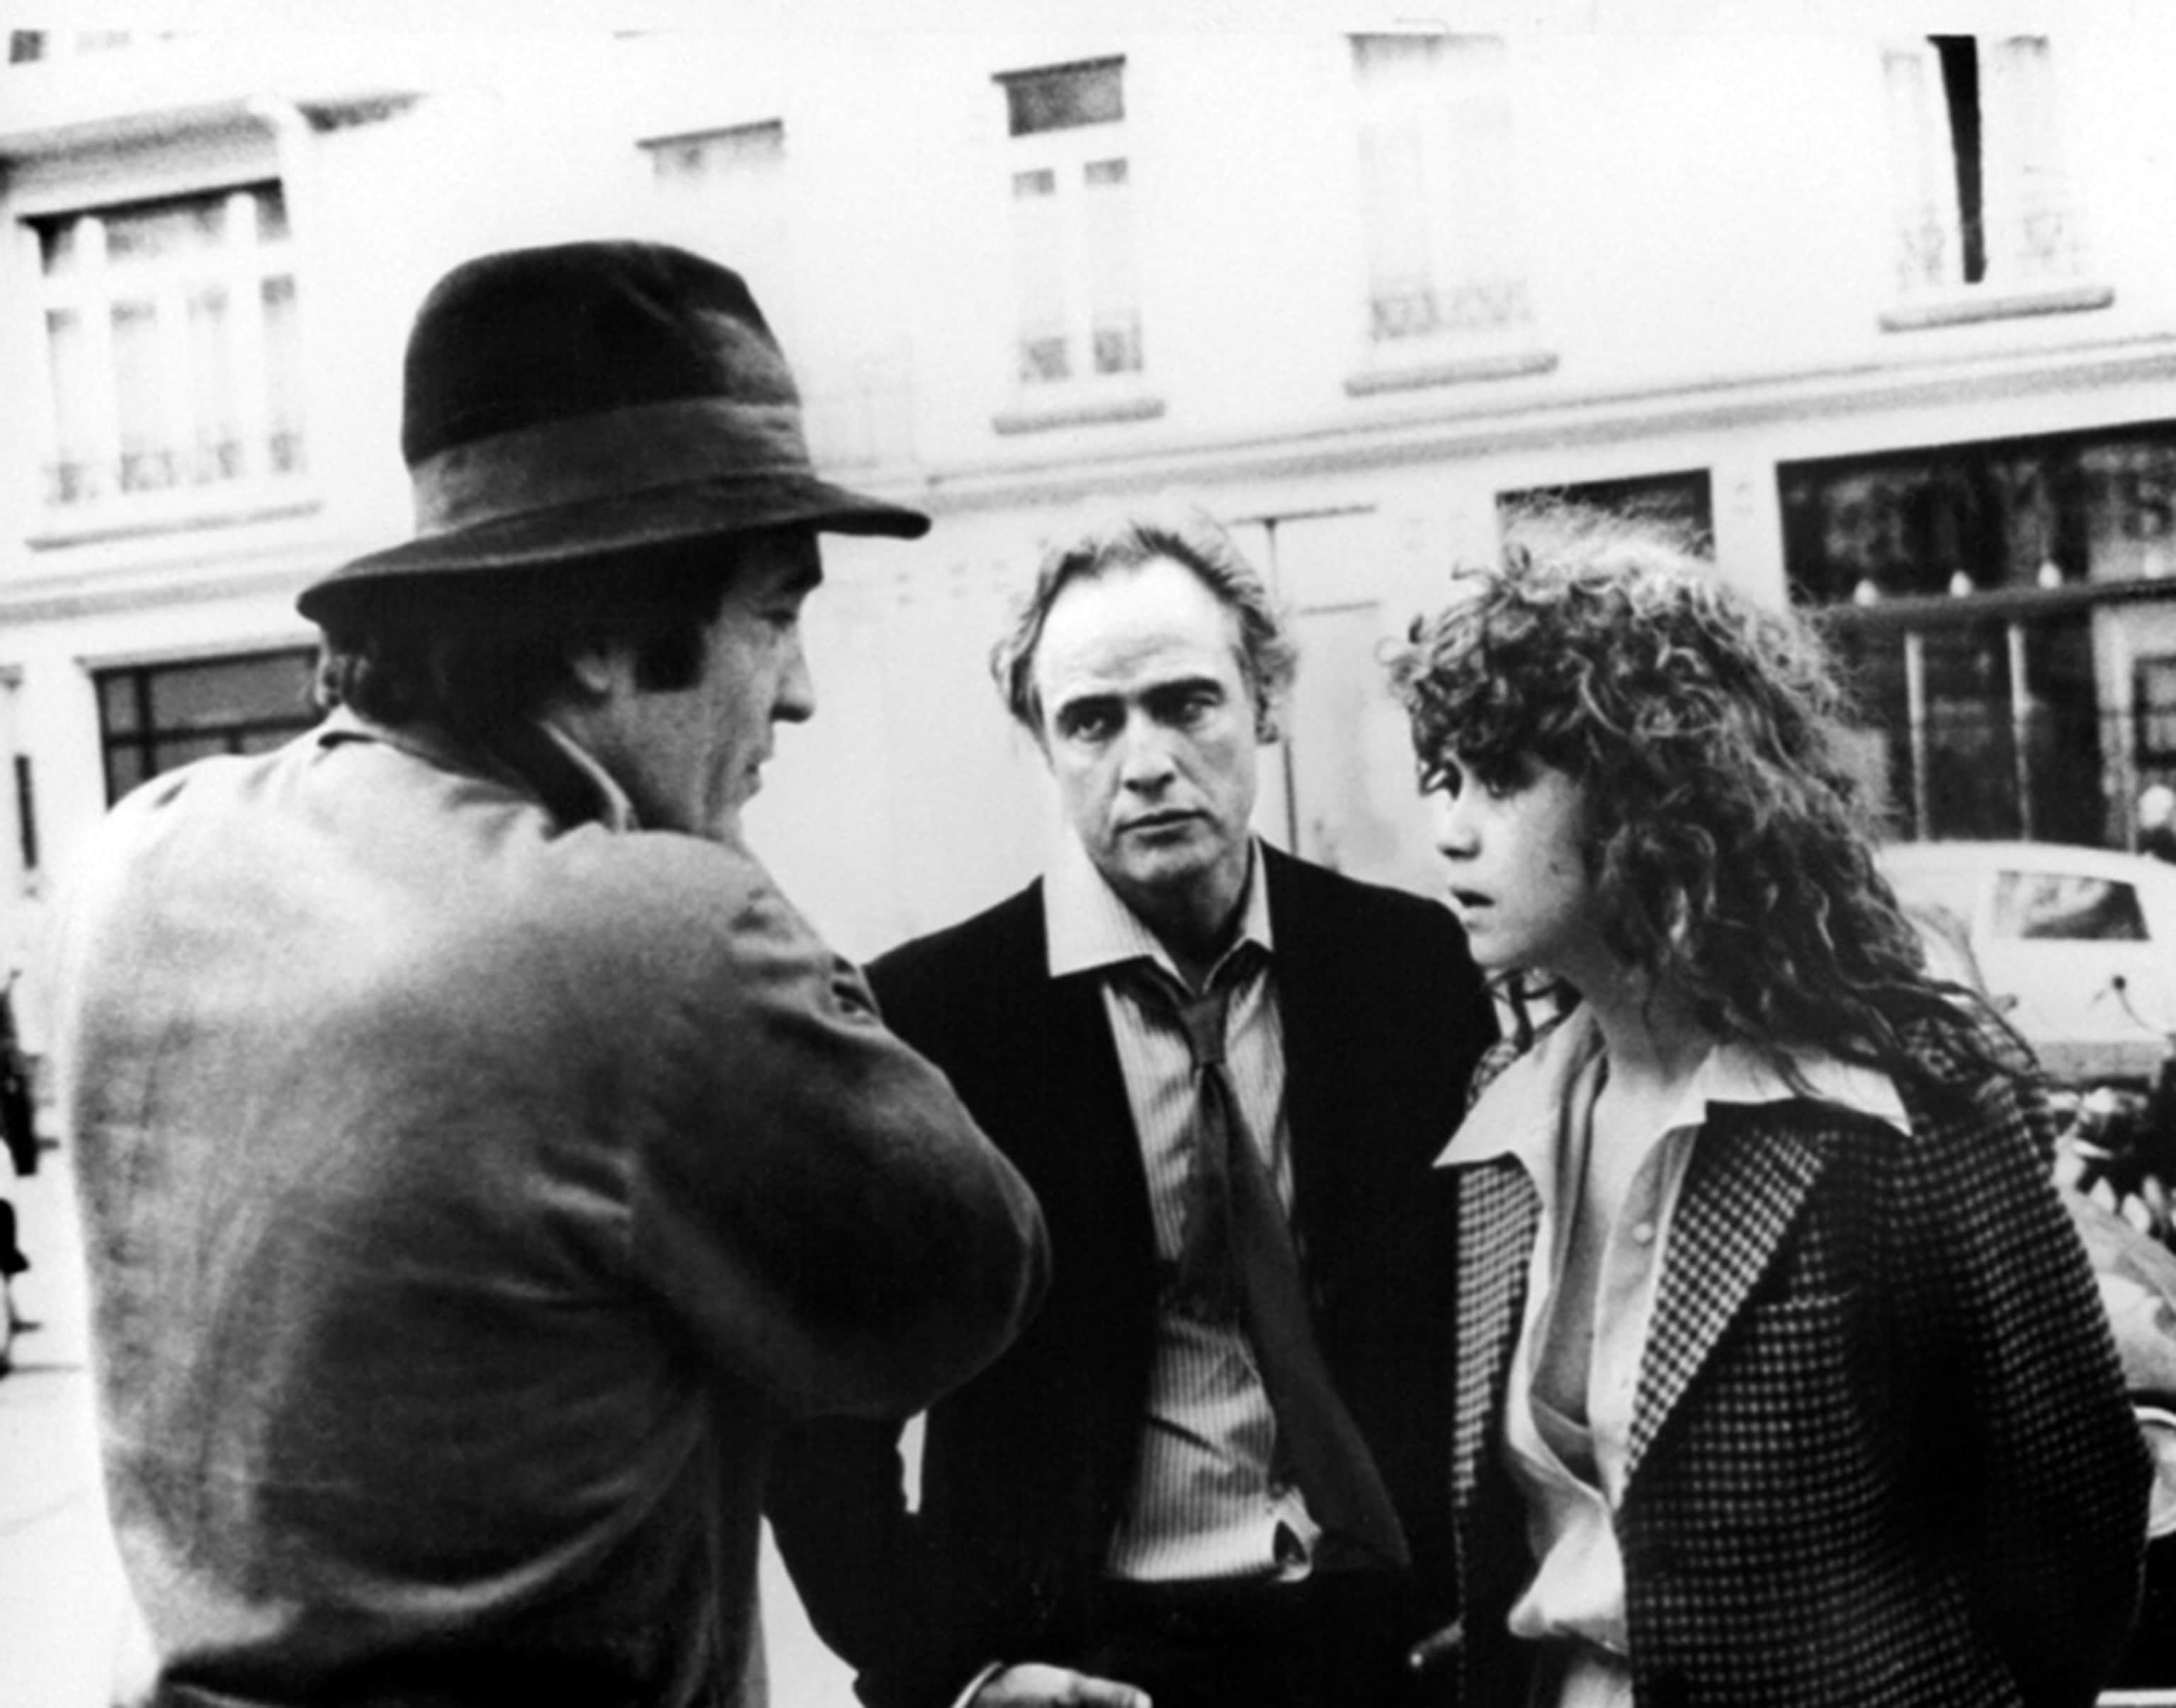 Nastri 1973: Miglior film "Ultimo tango a Parigi" di Bernardo Bertolucci